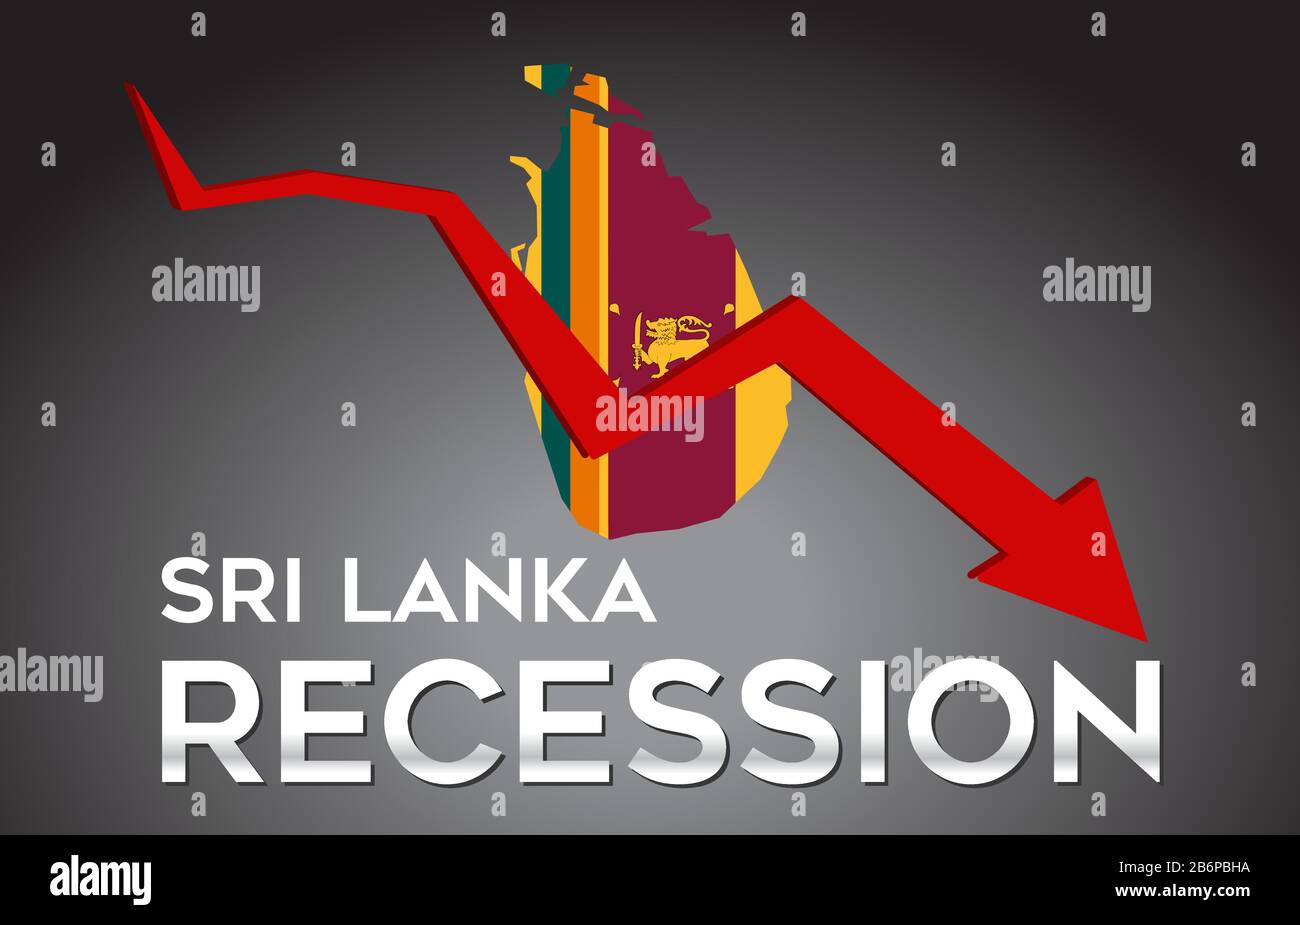 Karte der Rezession in Sri Lanka Kreatives Konzept mit Economic Crash Arrow Vector Illustration Design. Stock Vektor